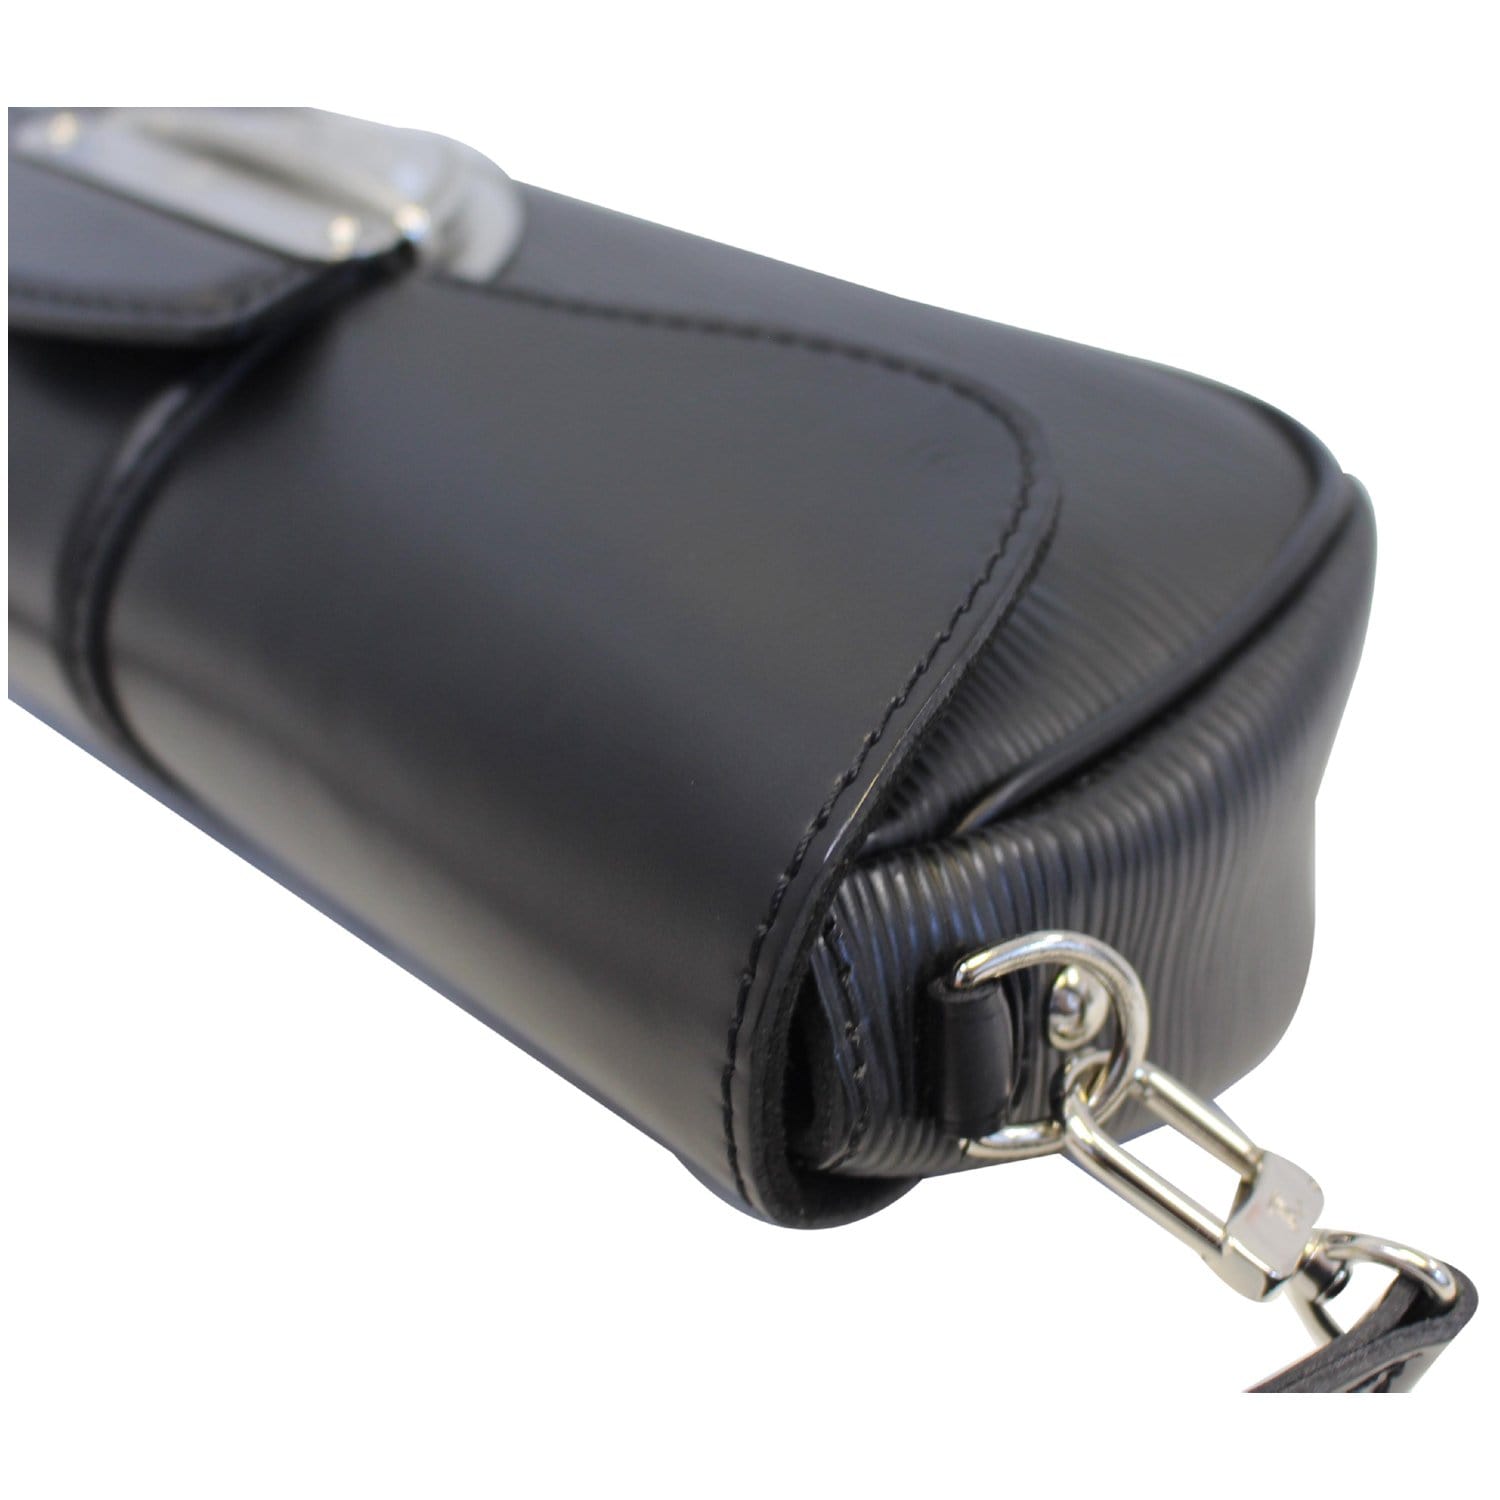 Epi Montaigne Clutch Bag - Ivory – ZAK BAGS ©️